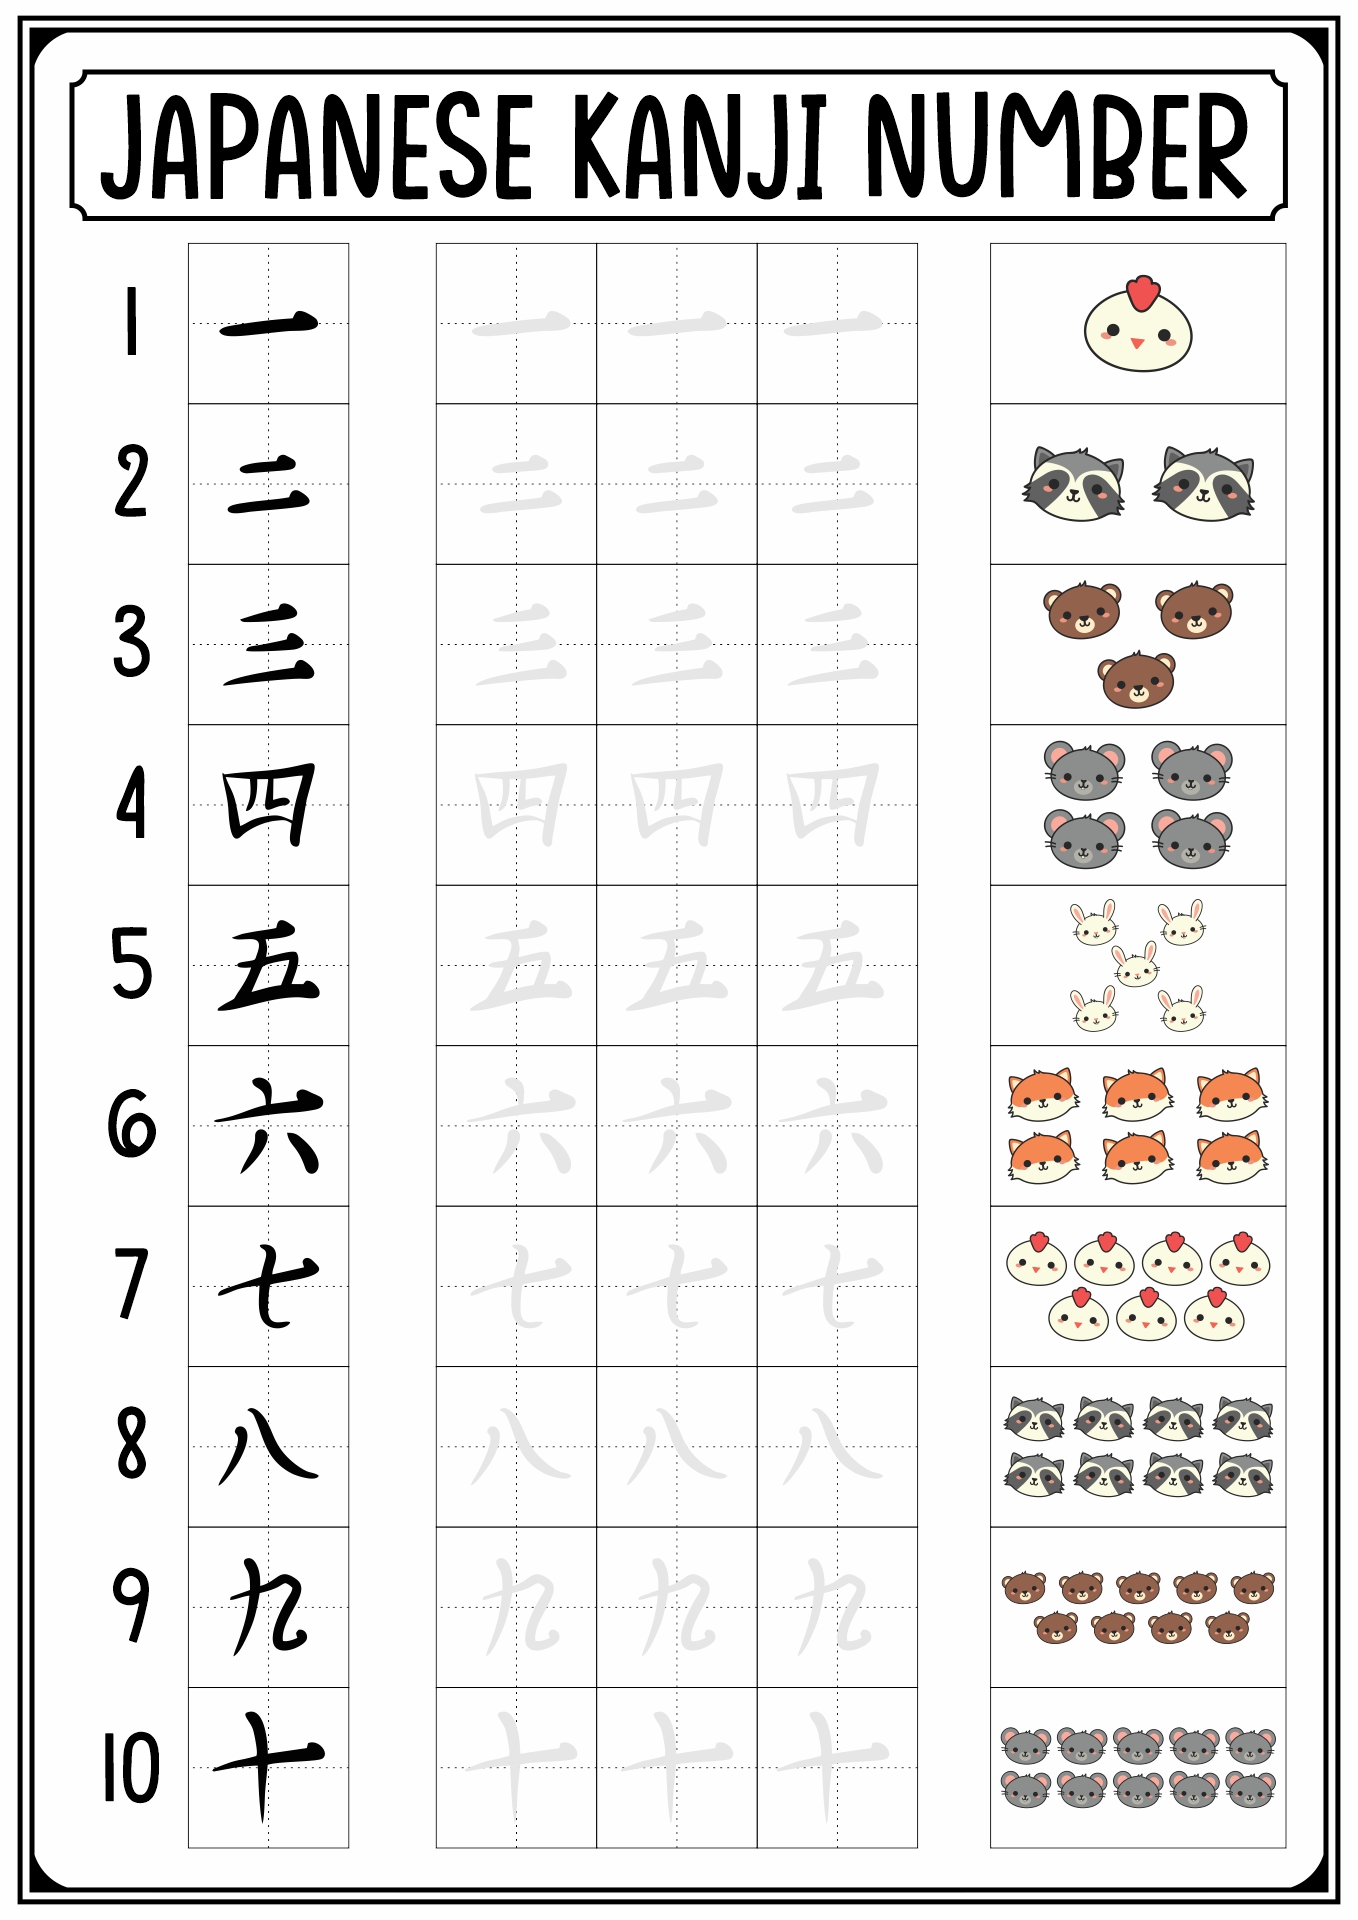 homework in japanese kanji